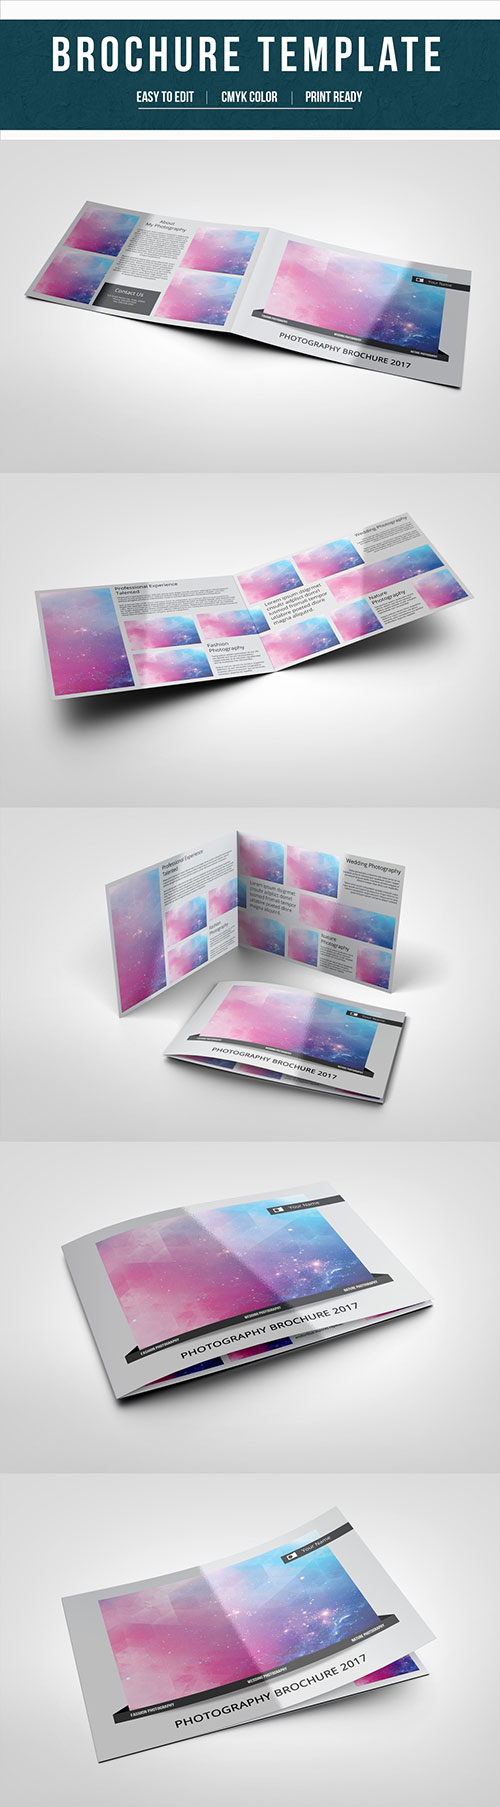 AdobeStock Photography Brochure Layout 3 179868096